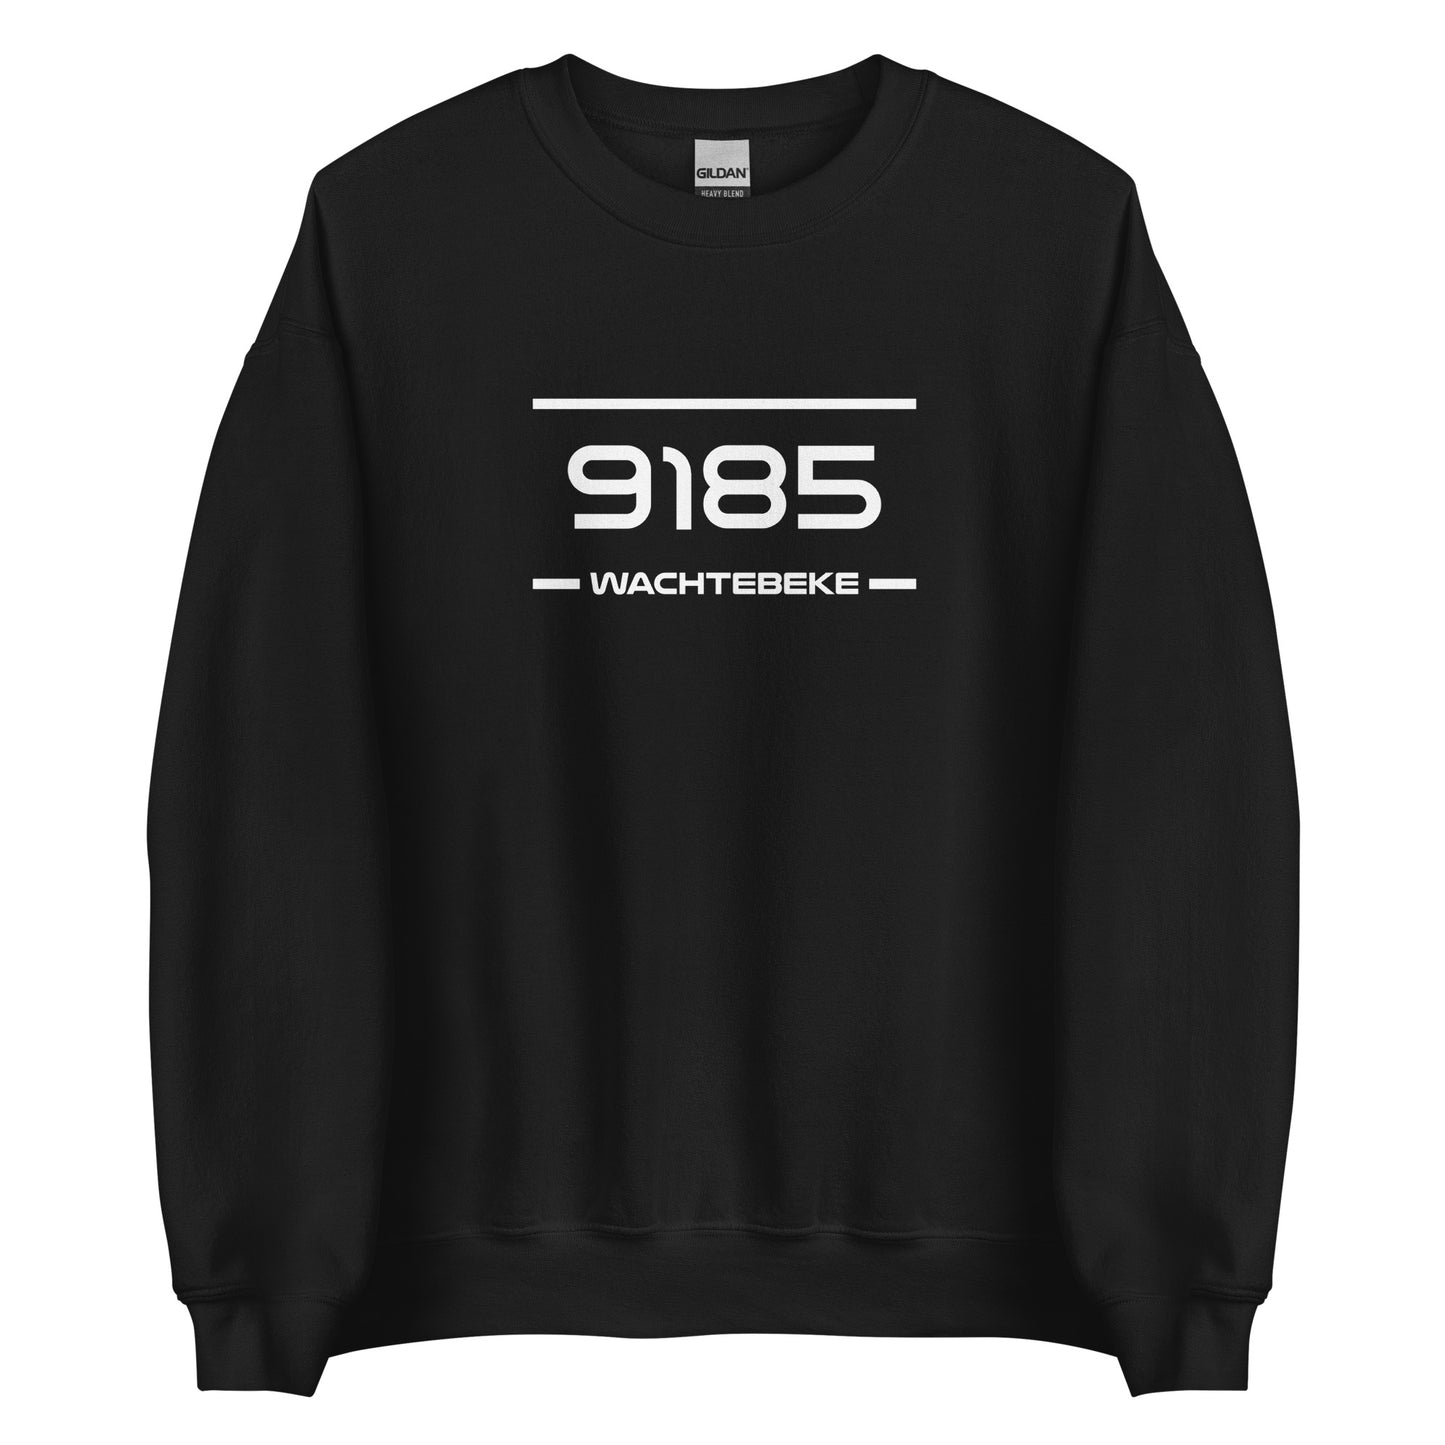 Sweater - 9185 - Wachtebeke (M/V)